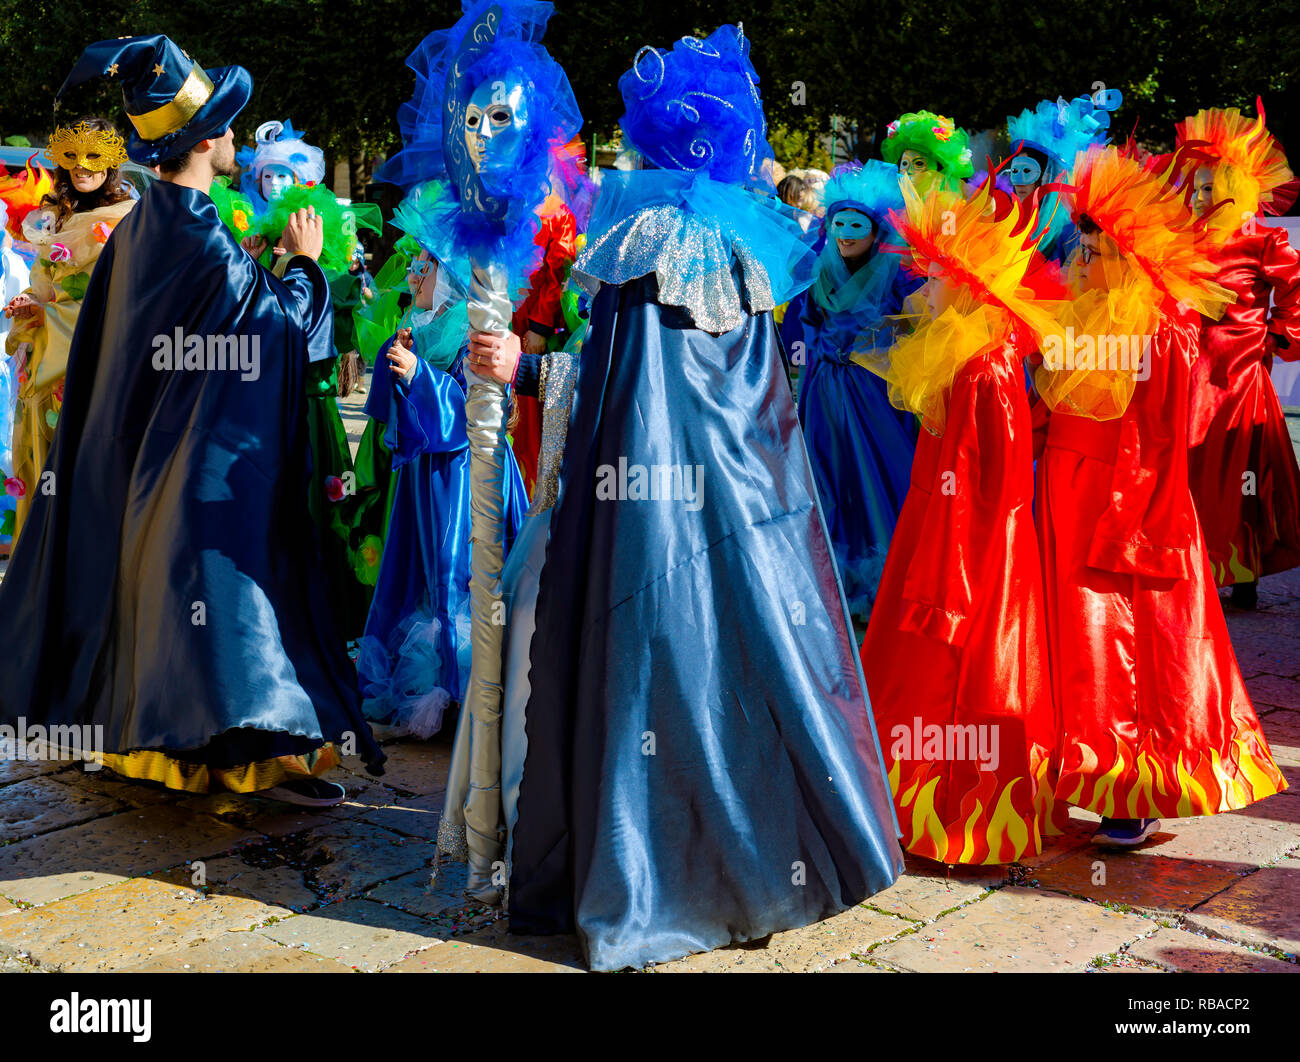 Gruppi Mascherati Immagini e Fotos Stock - Alamy